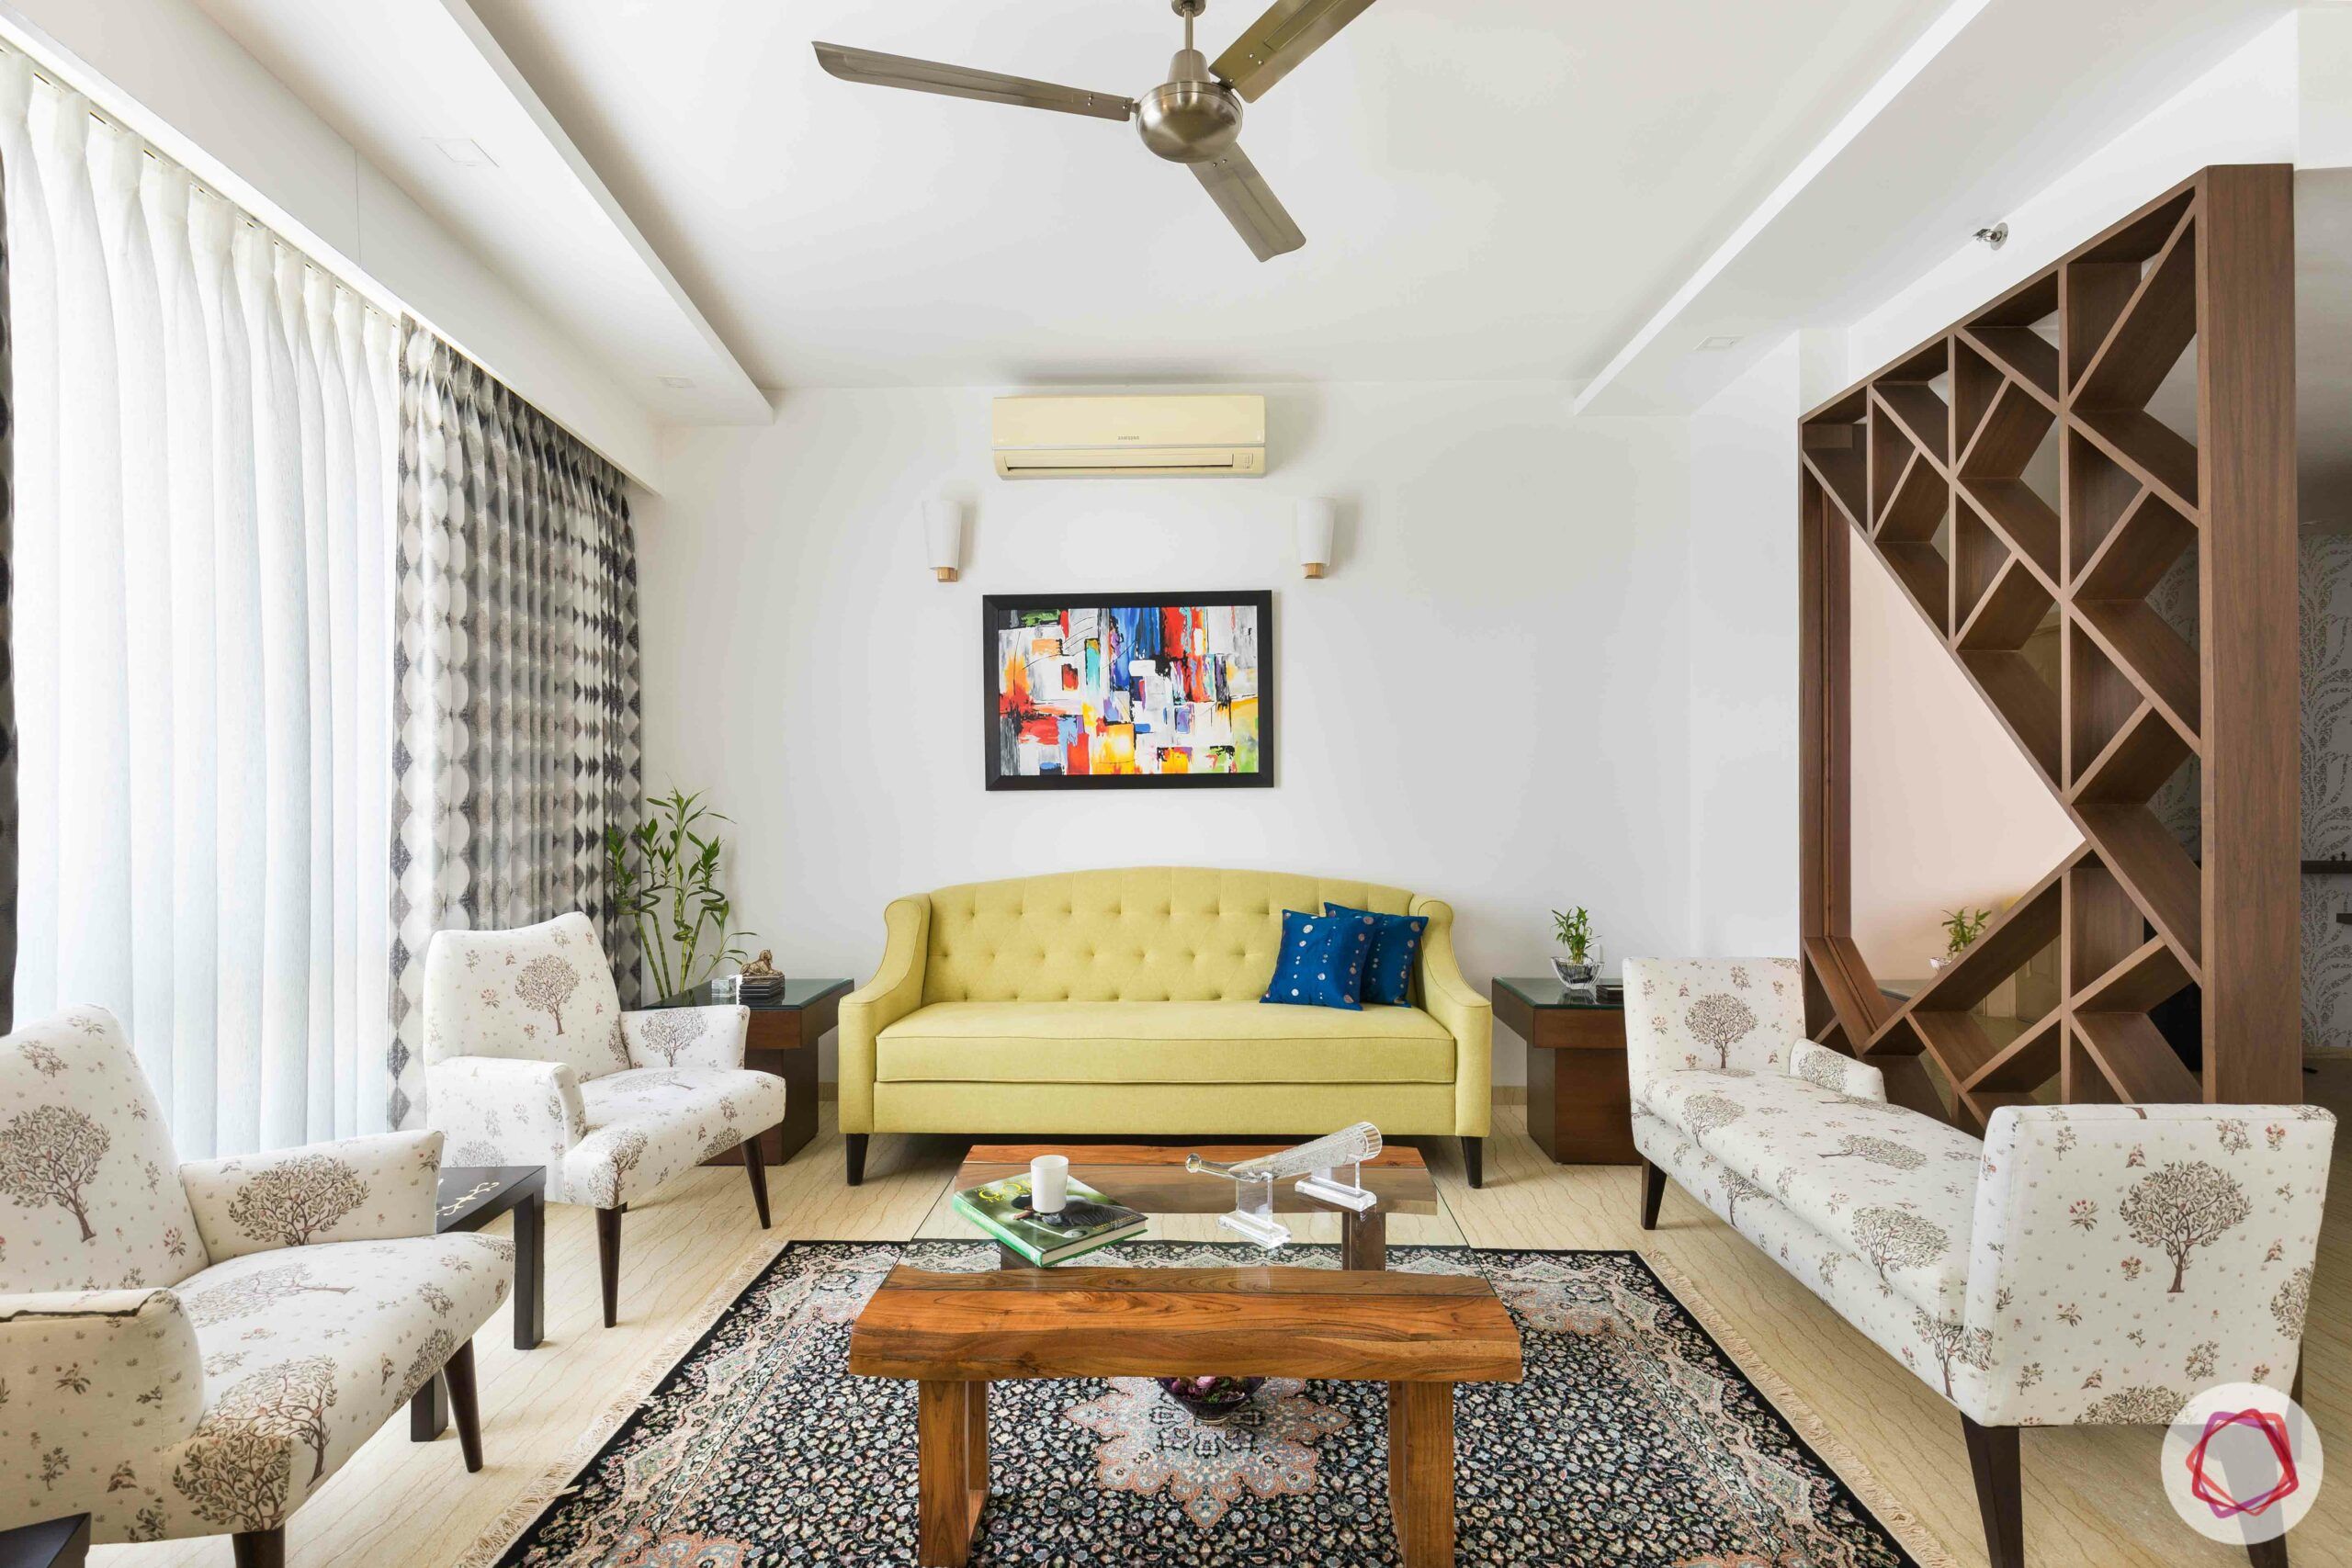 livspace gurgaon-yellow sofa designs-partition designs